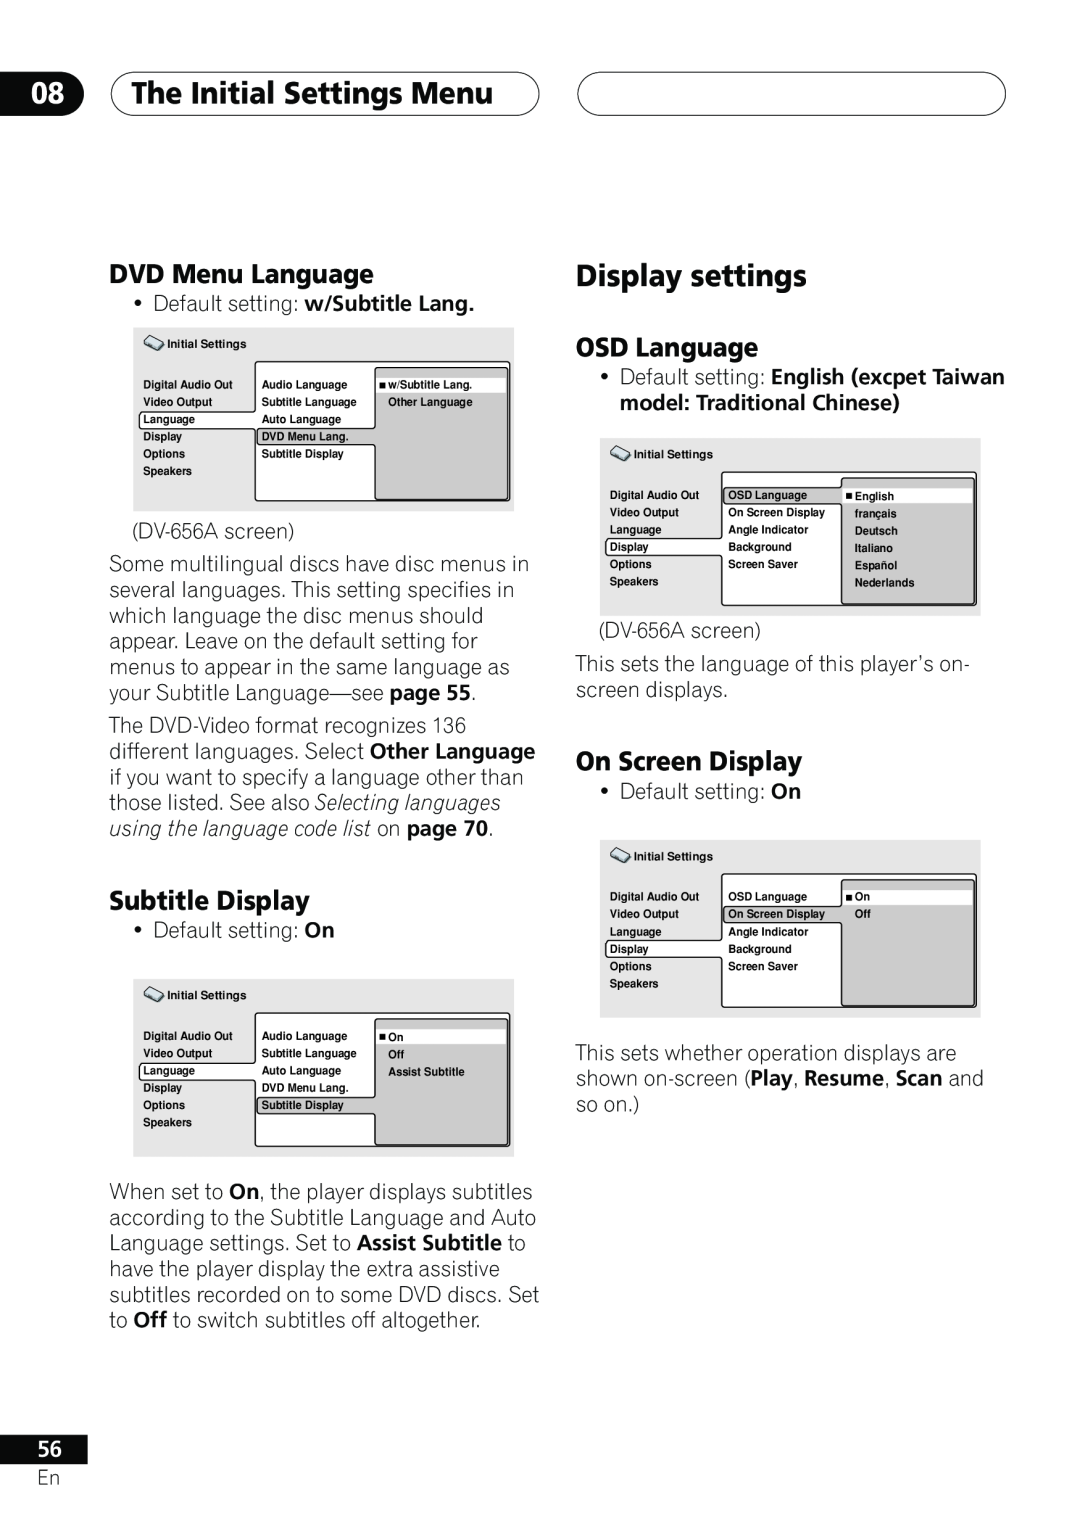 Pioneer DV-656A, 655A Display settings, DVD Menu Language, Subtitle Display, OSD Language, On Screen Display 